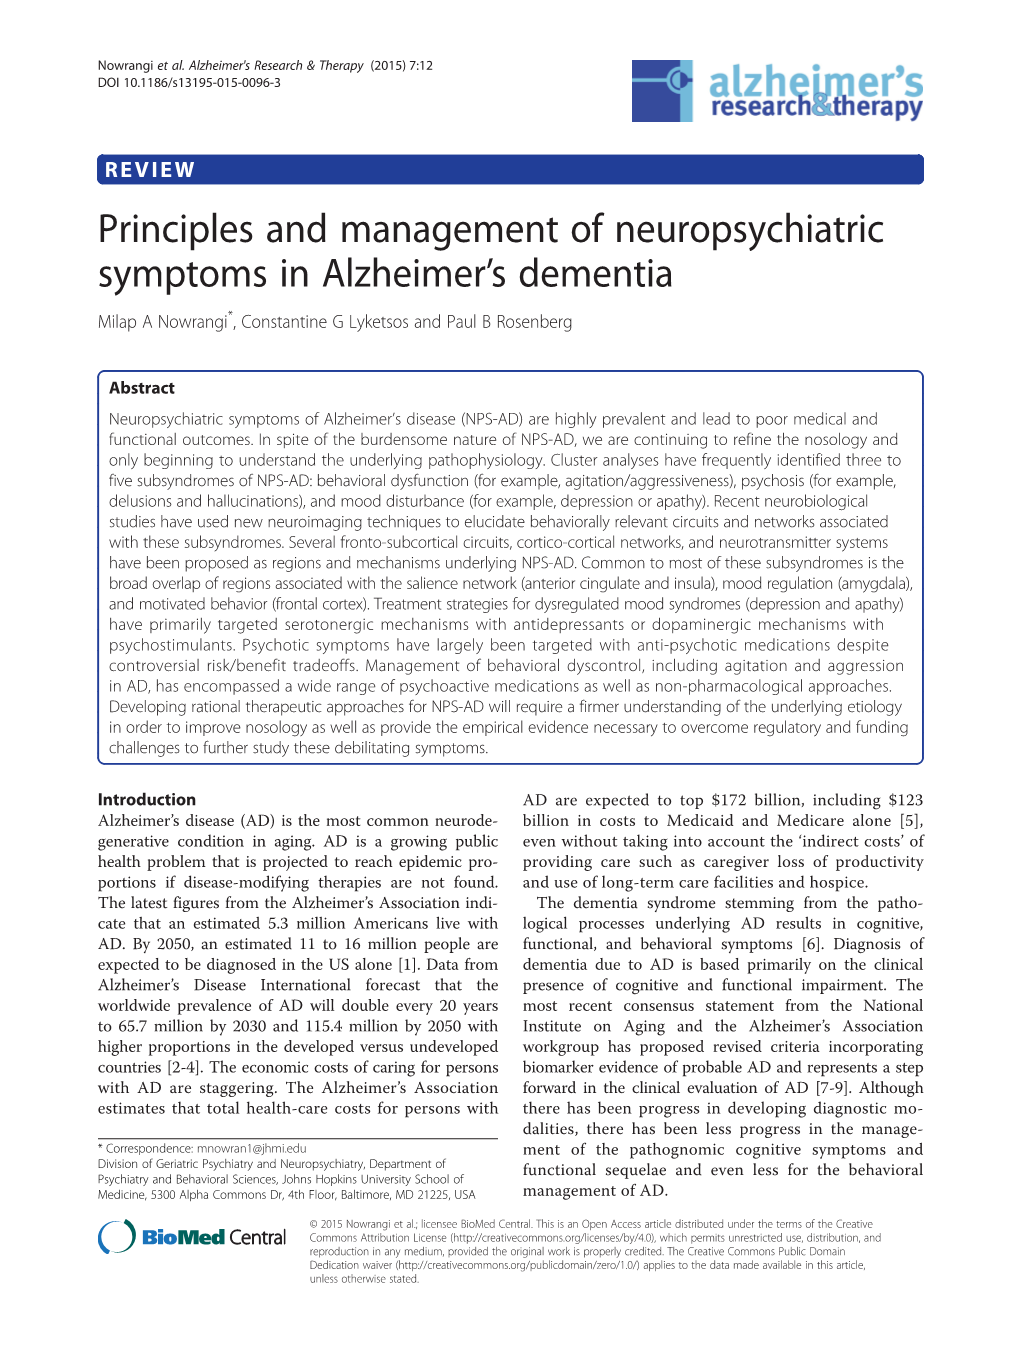 Principles and Management of Neuropsychiatric Symptoms in Alzheimer’S Dementia Milap a Nowrangi*, Constantine G Lyketsos and Paul B Rosenberg